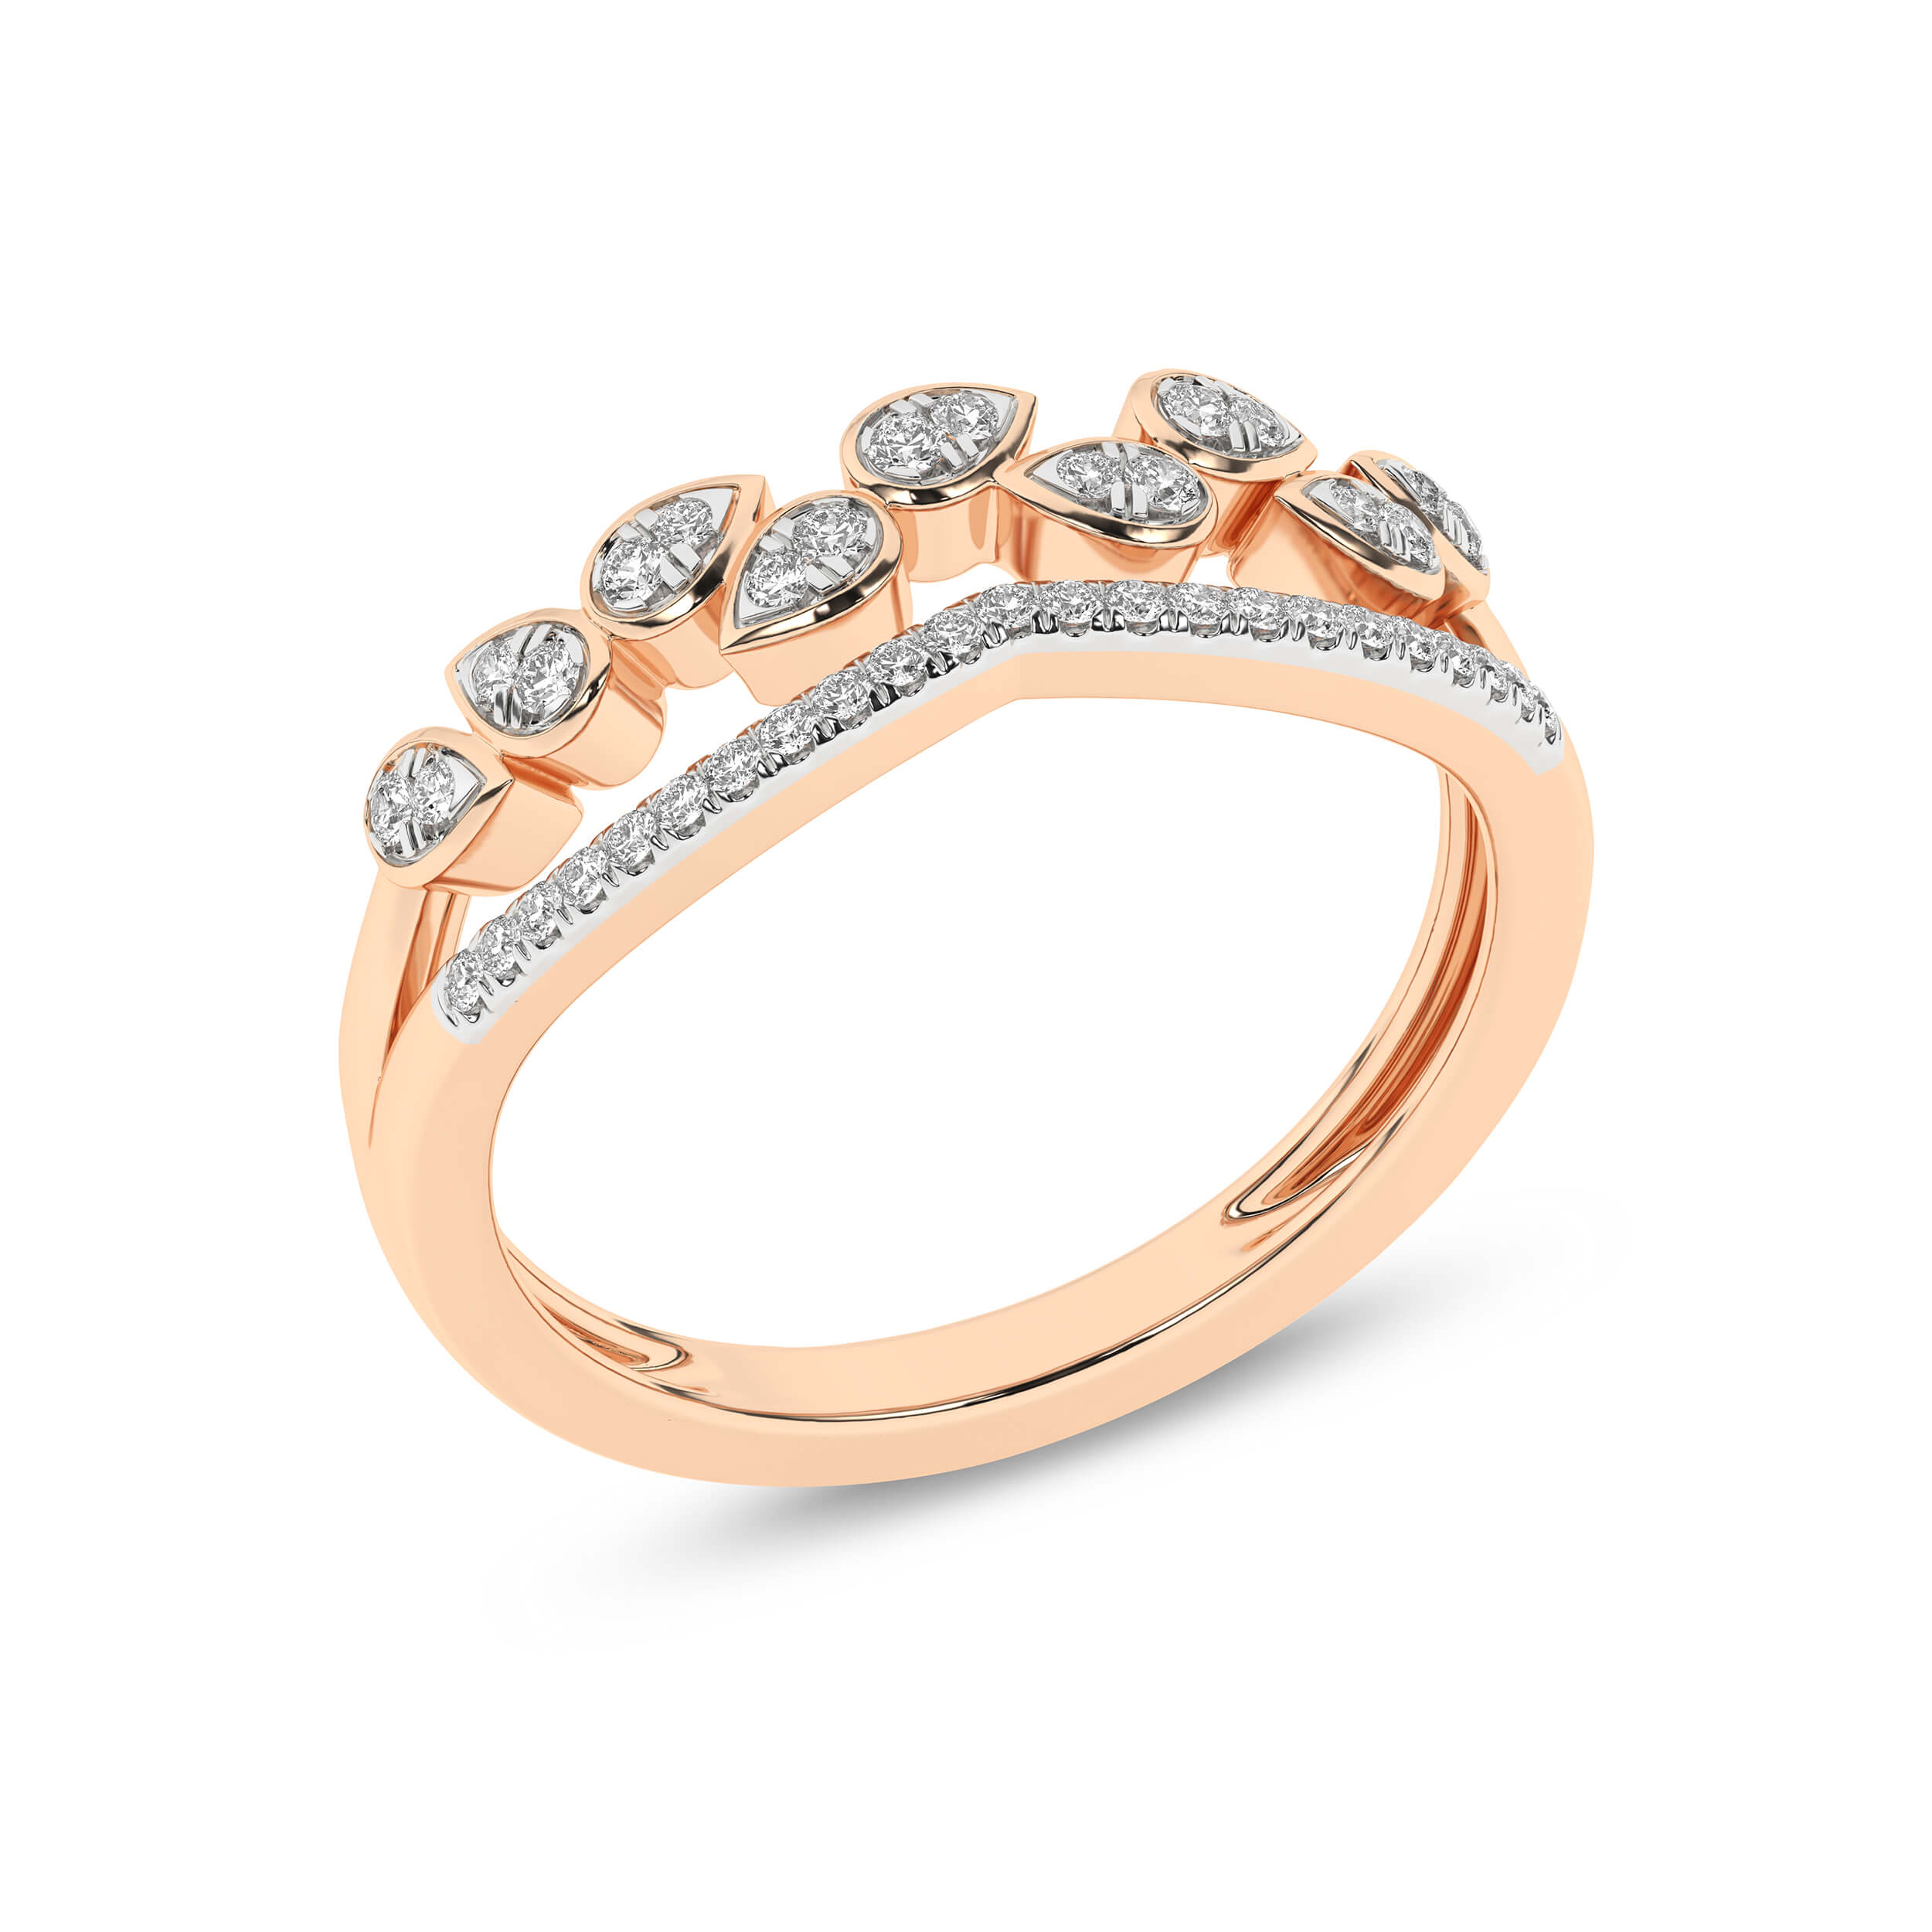 Inel din Aur Roz 14K cu Diamante 0.15Ct, articol RF14900, previzualizare foto 4